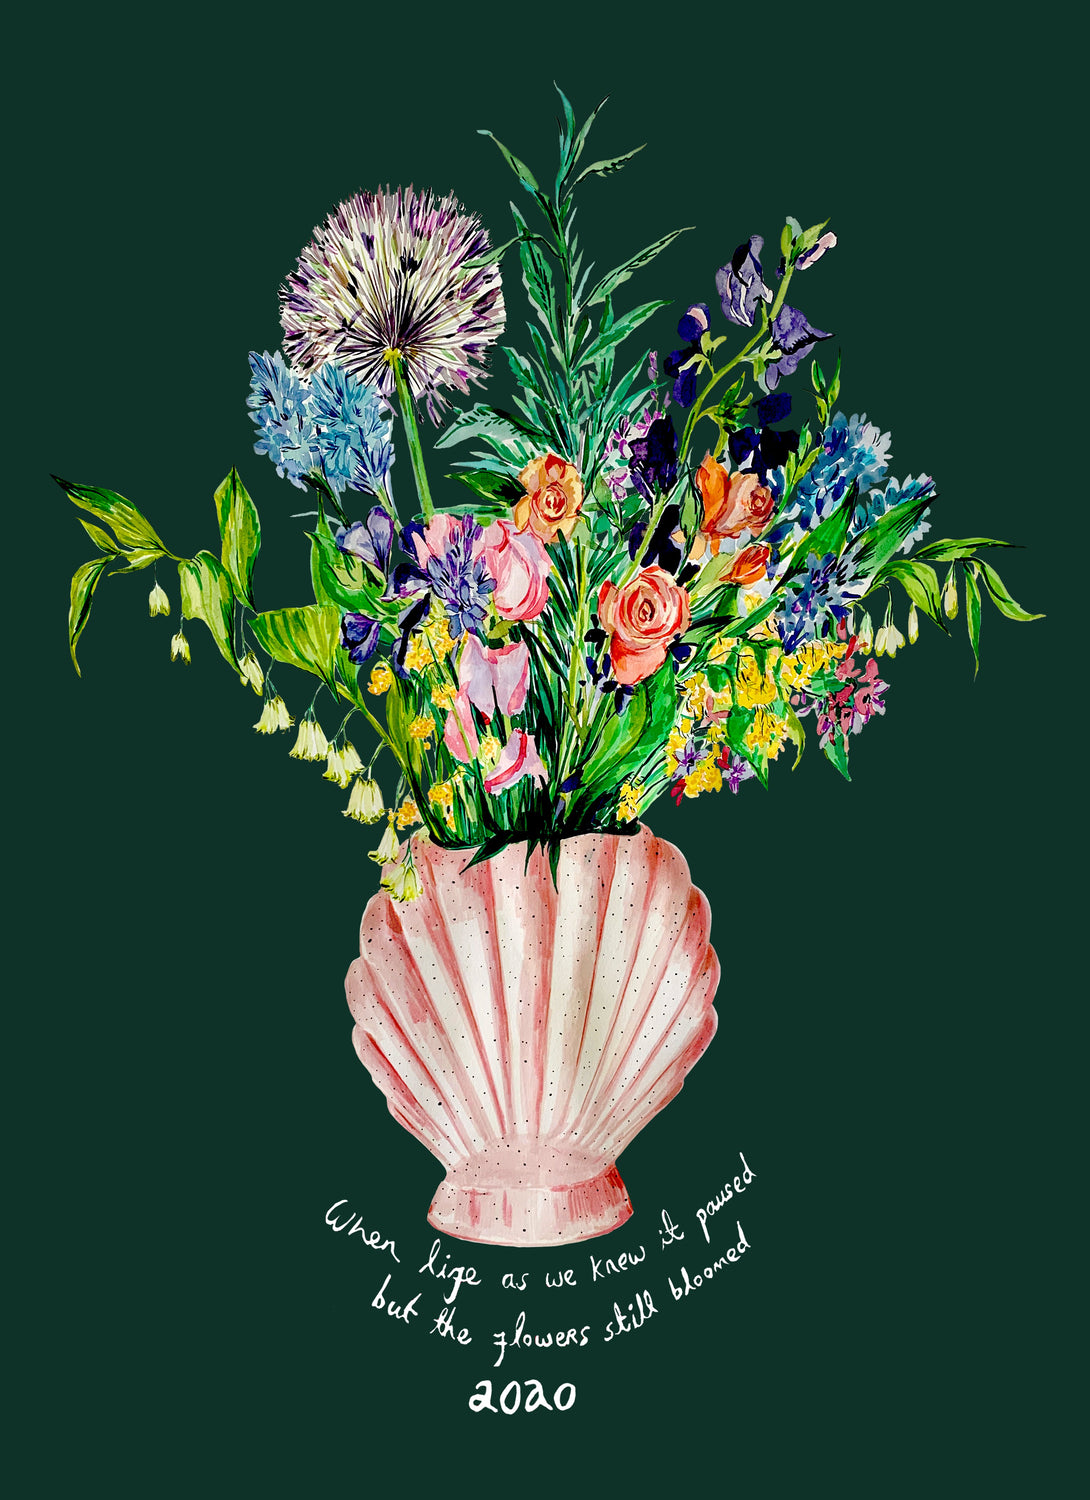 Shell Vase Of Garden Blooms Winter Edition Giclée Print